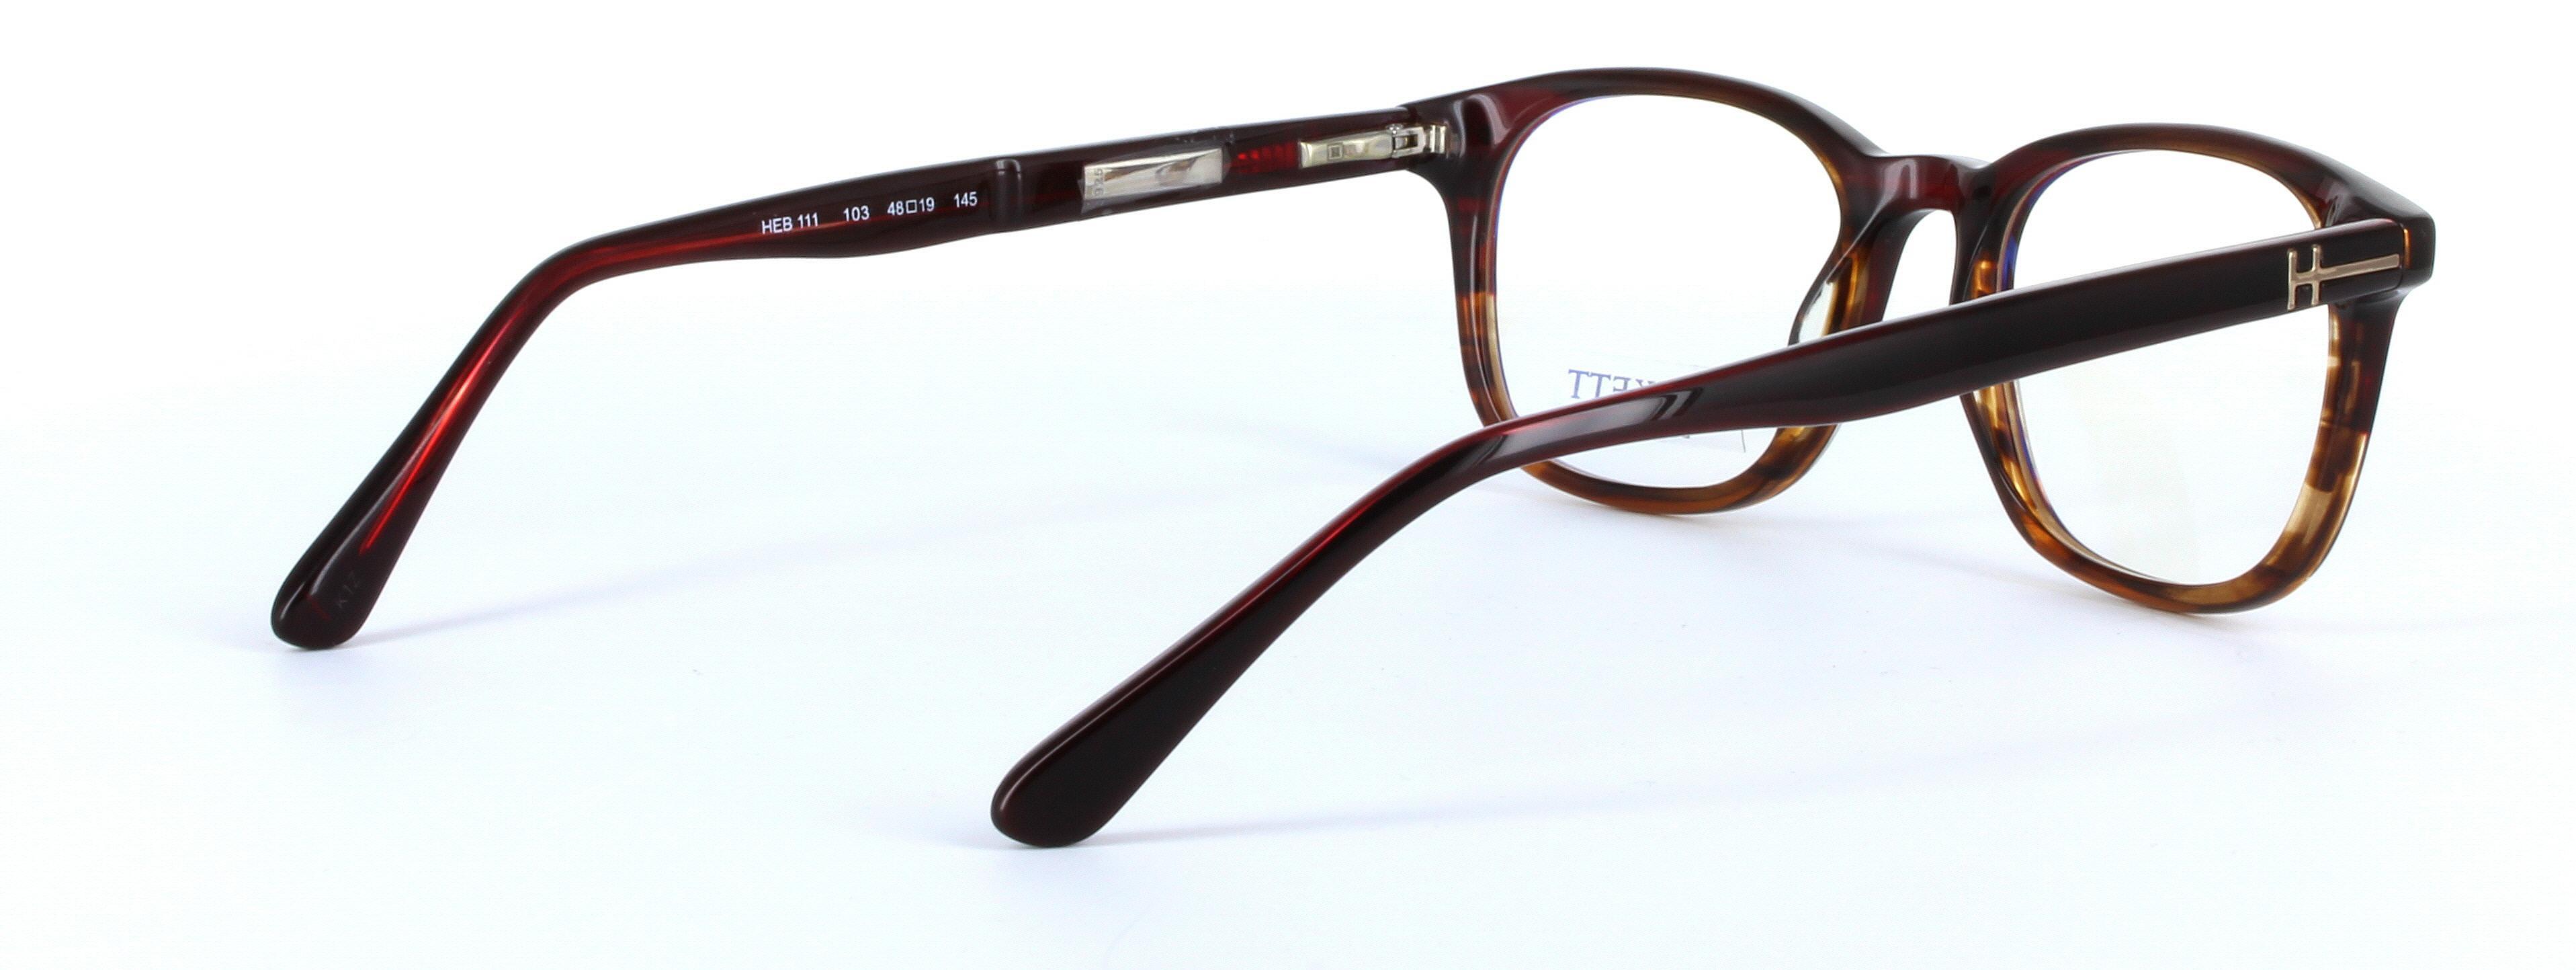 HACKETT BESPOKE (HEB111-103) Brown Full Rim Oval Round Acetate Glasses - Image View 4